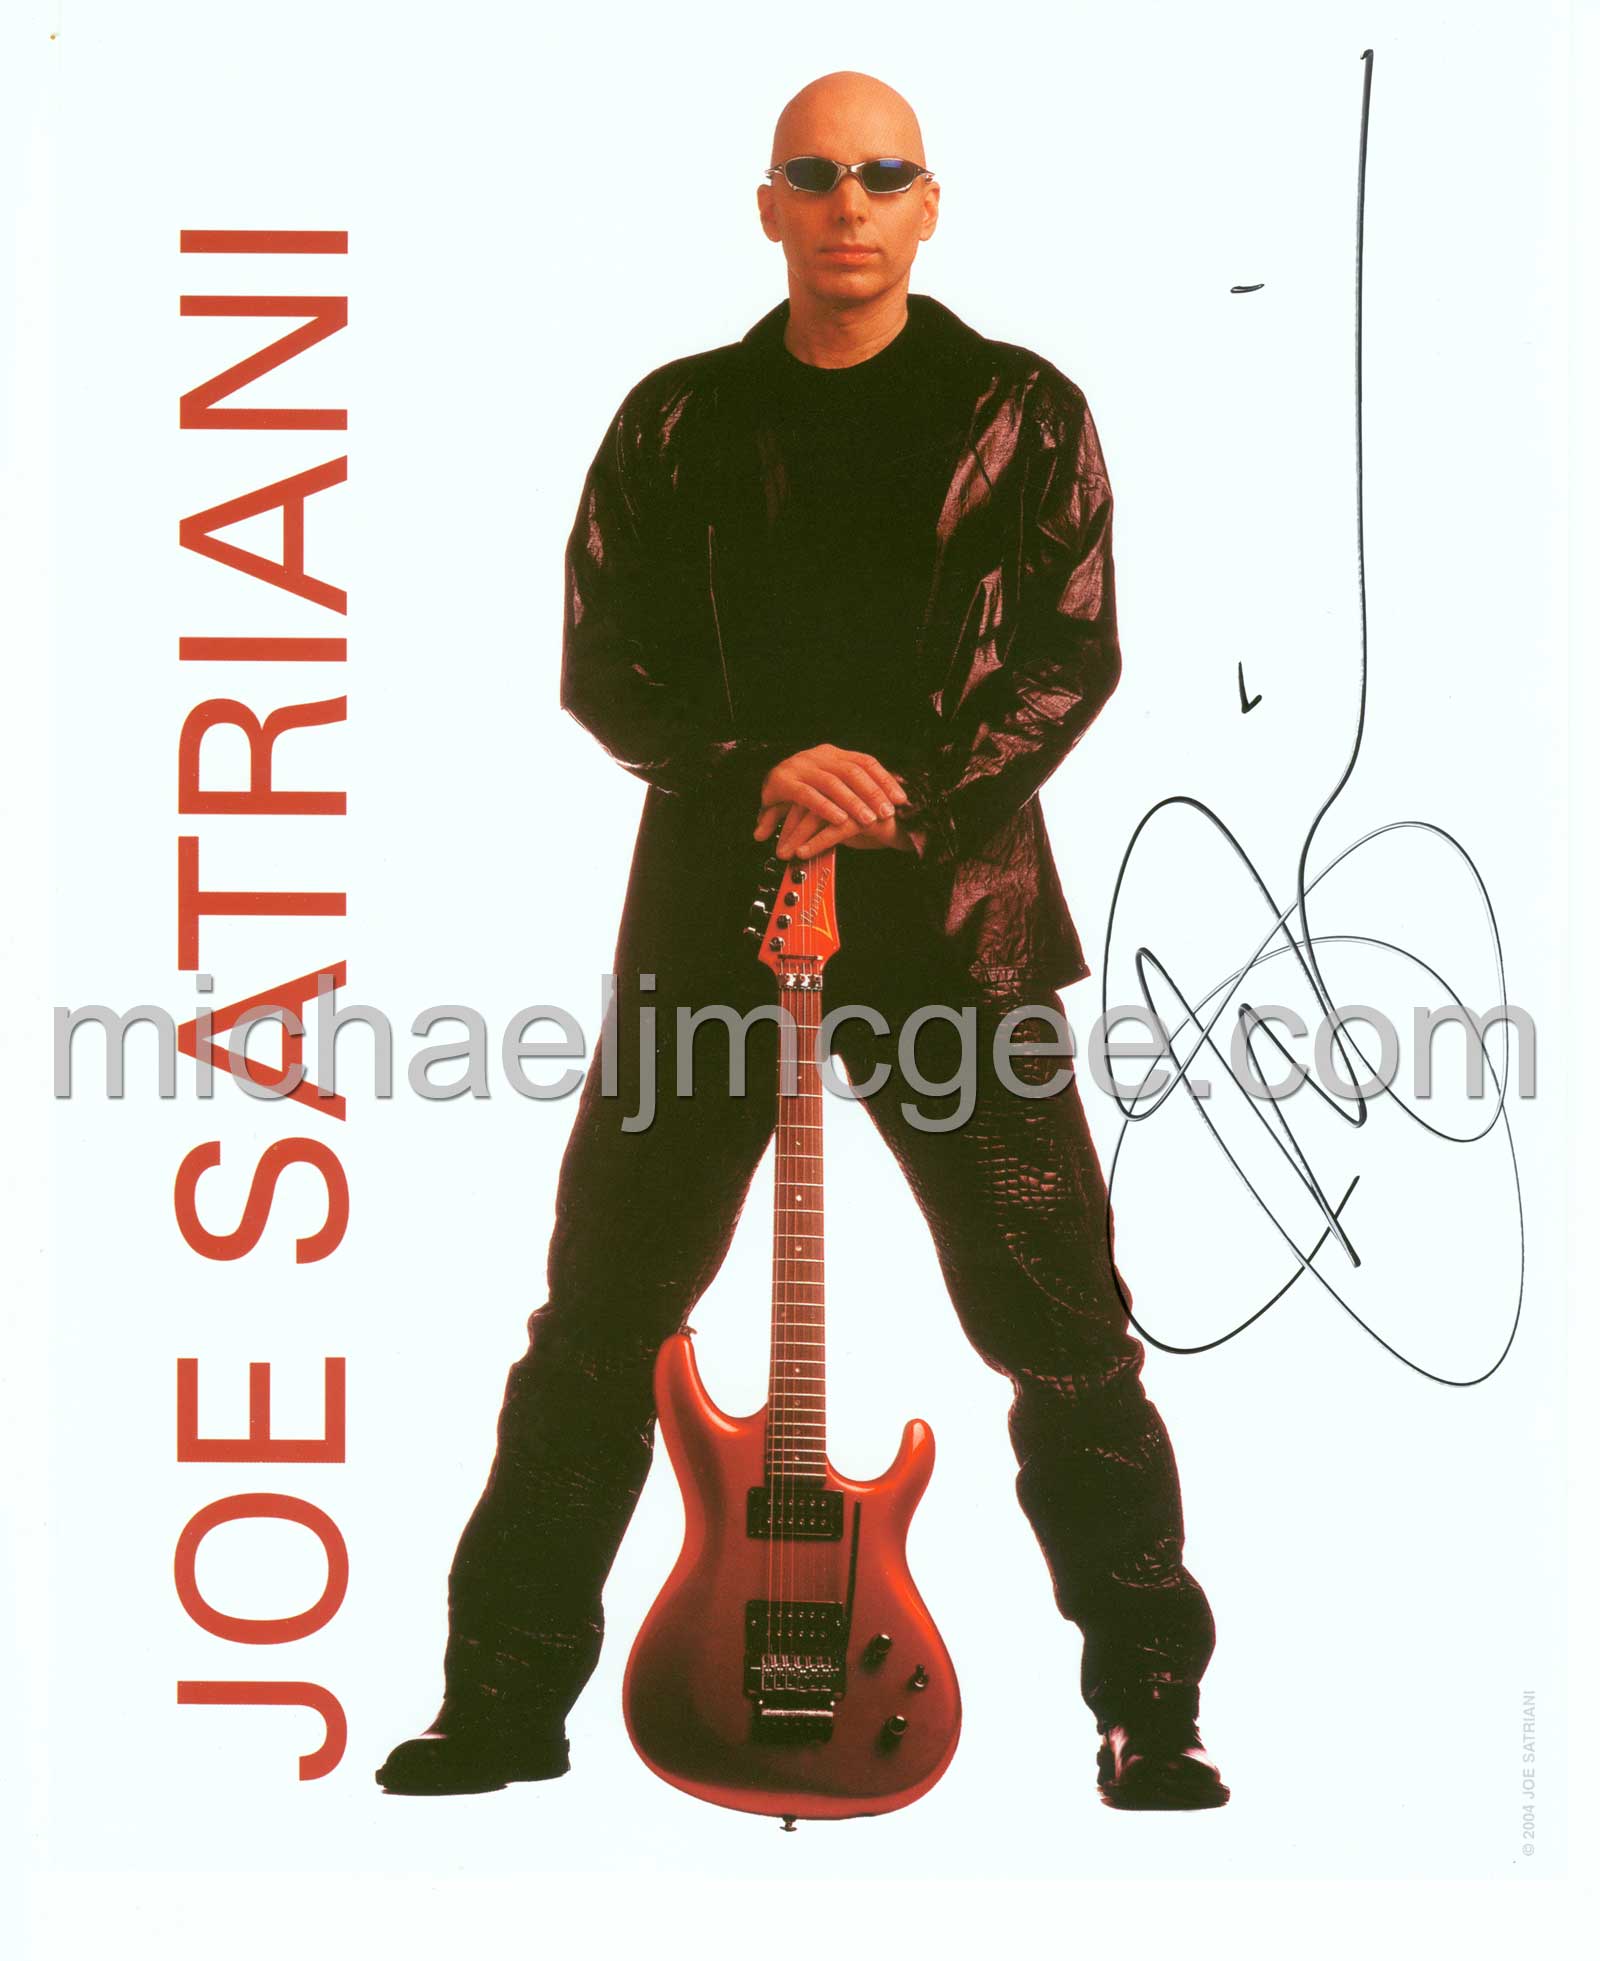 Joe Satriani / michaeljmcgee.com